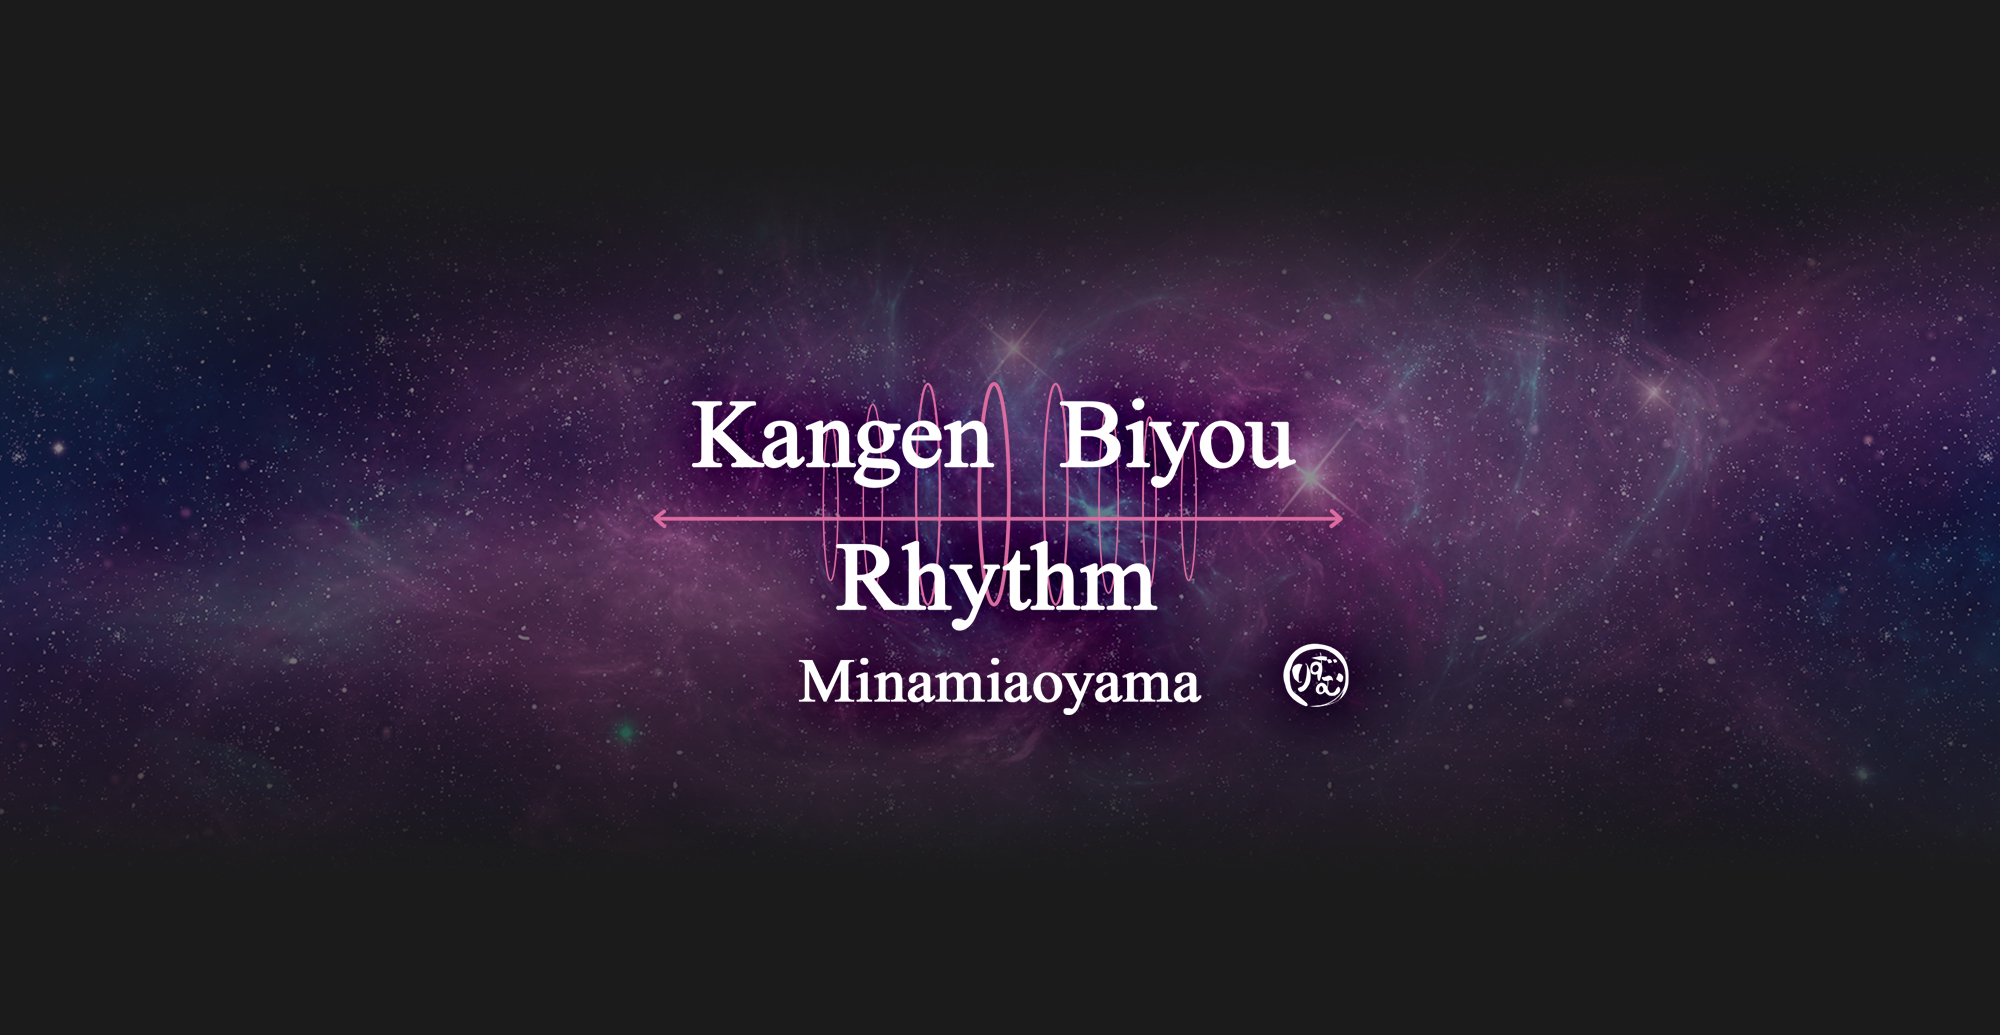 Kangen Biyou Rhythm minamiaoyama